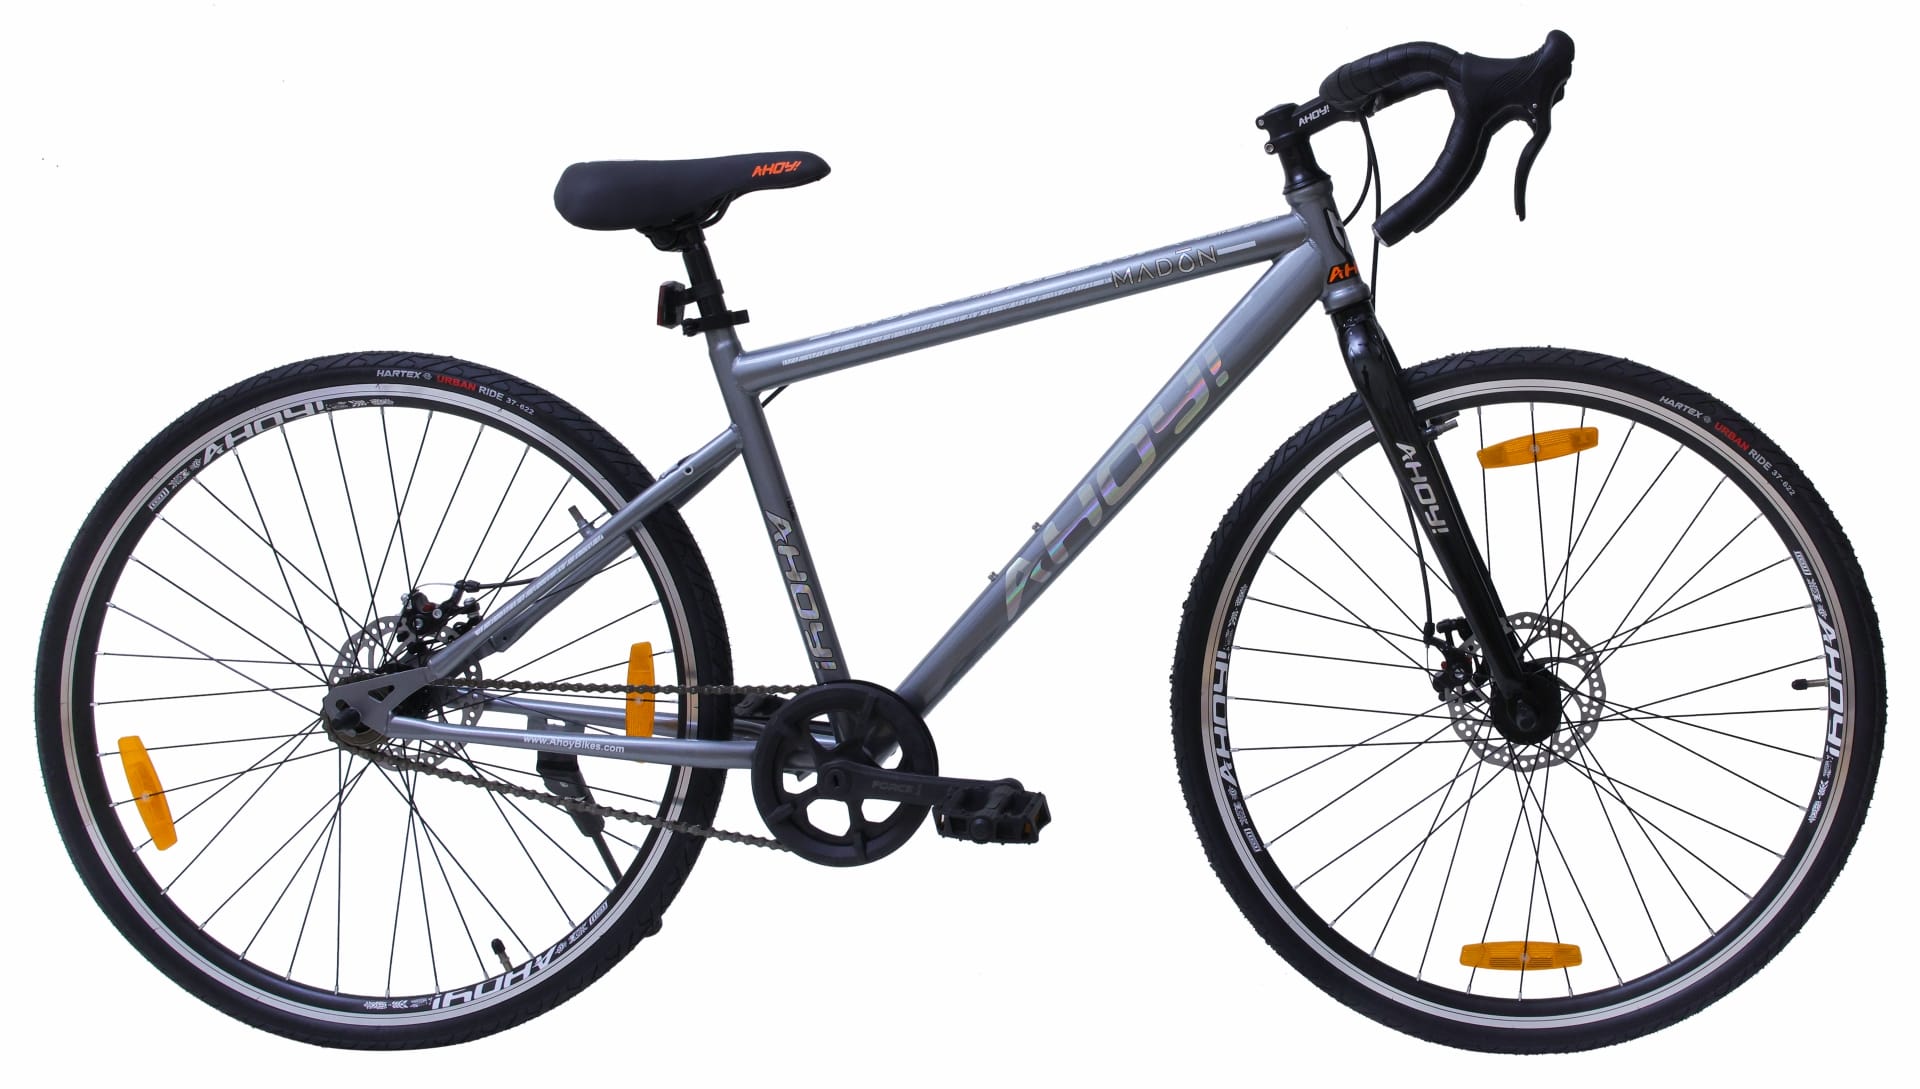 Madon Road Bicycle | Buy Grey Single Speed Road Bike for Men